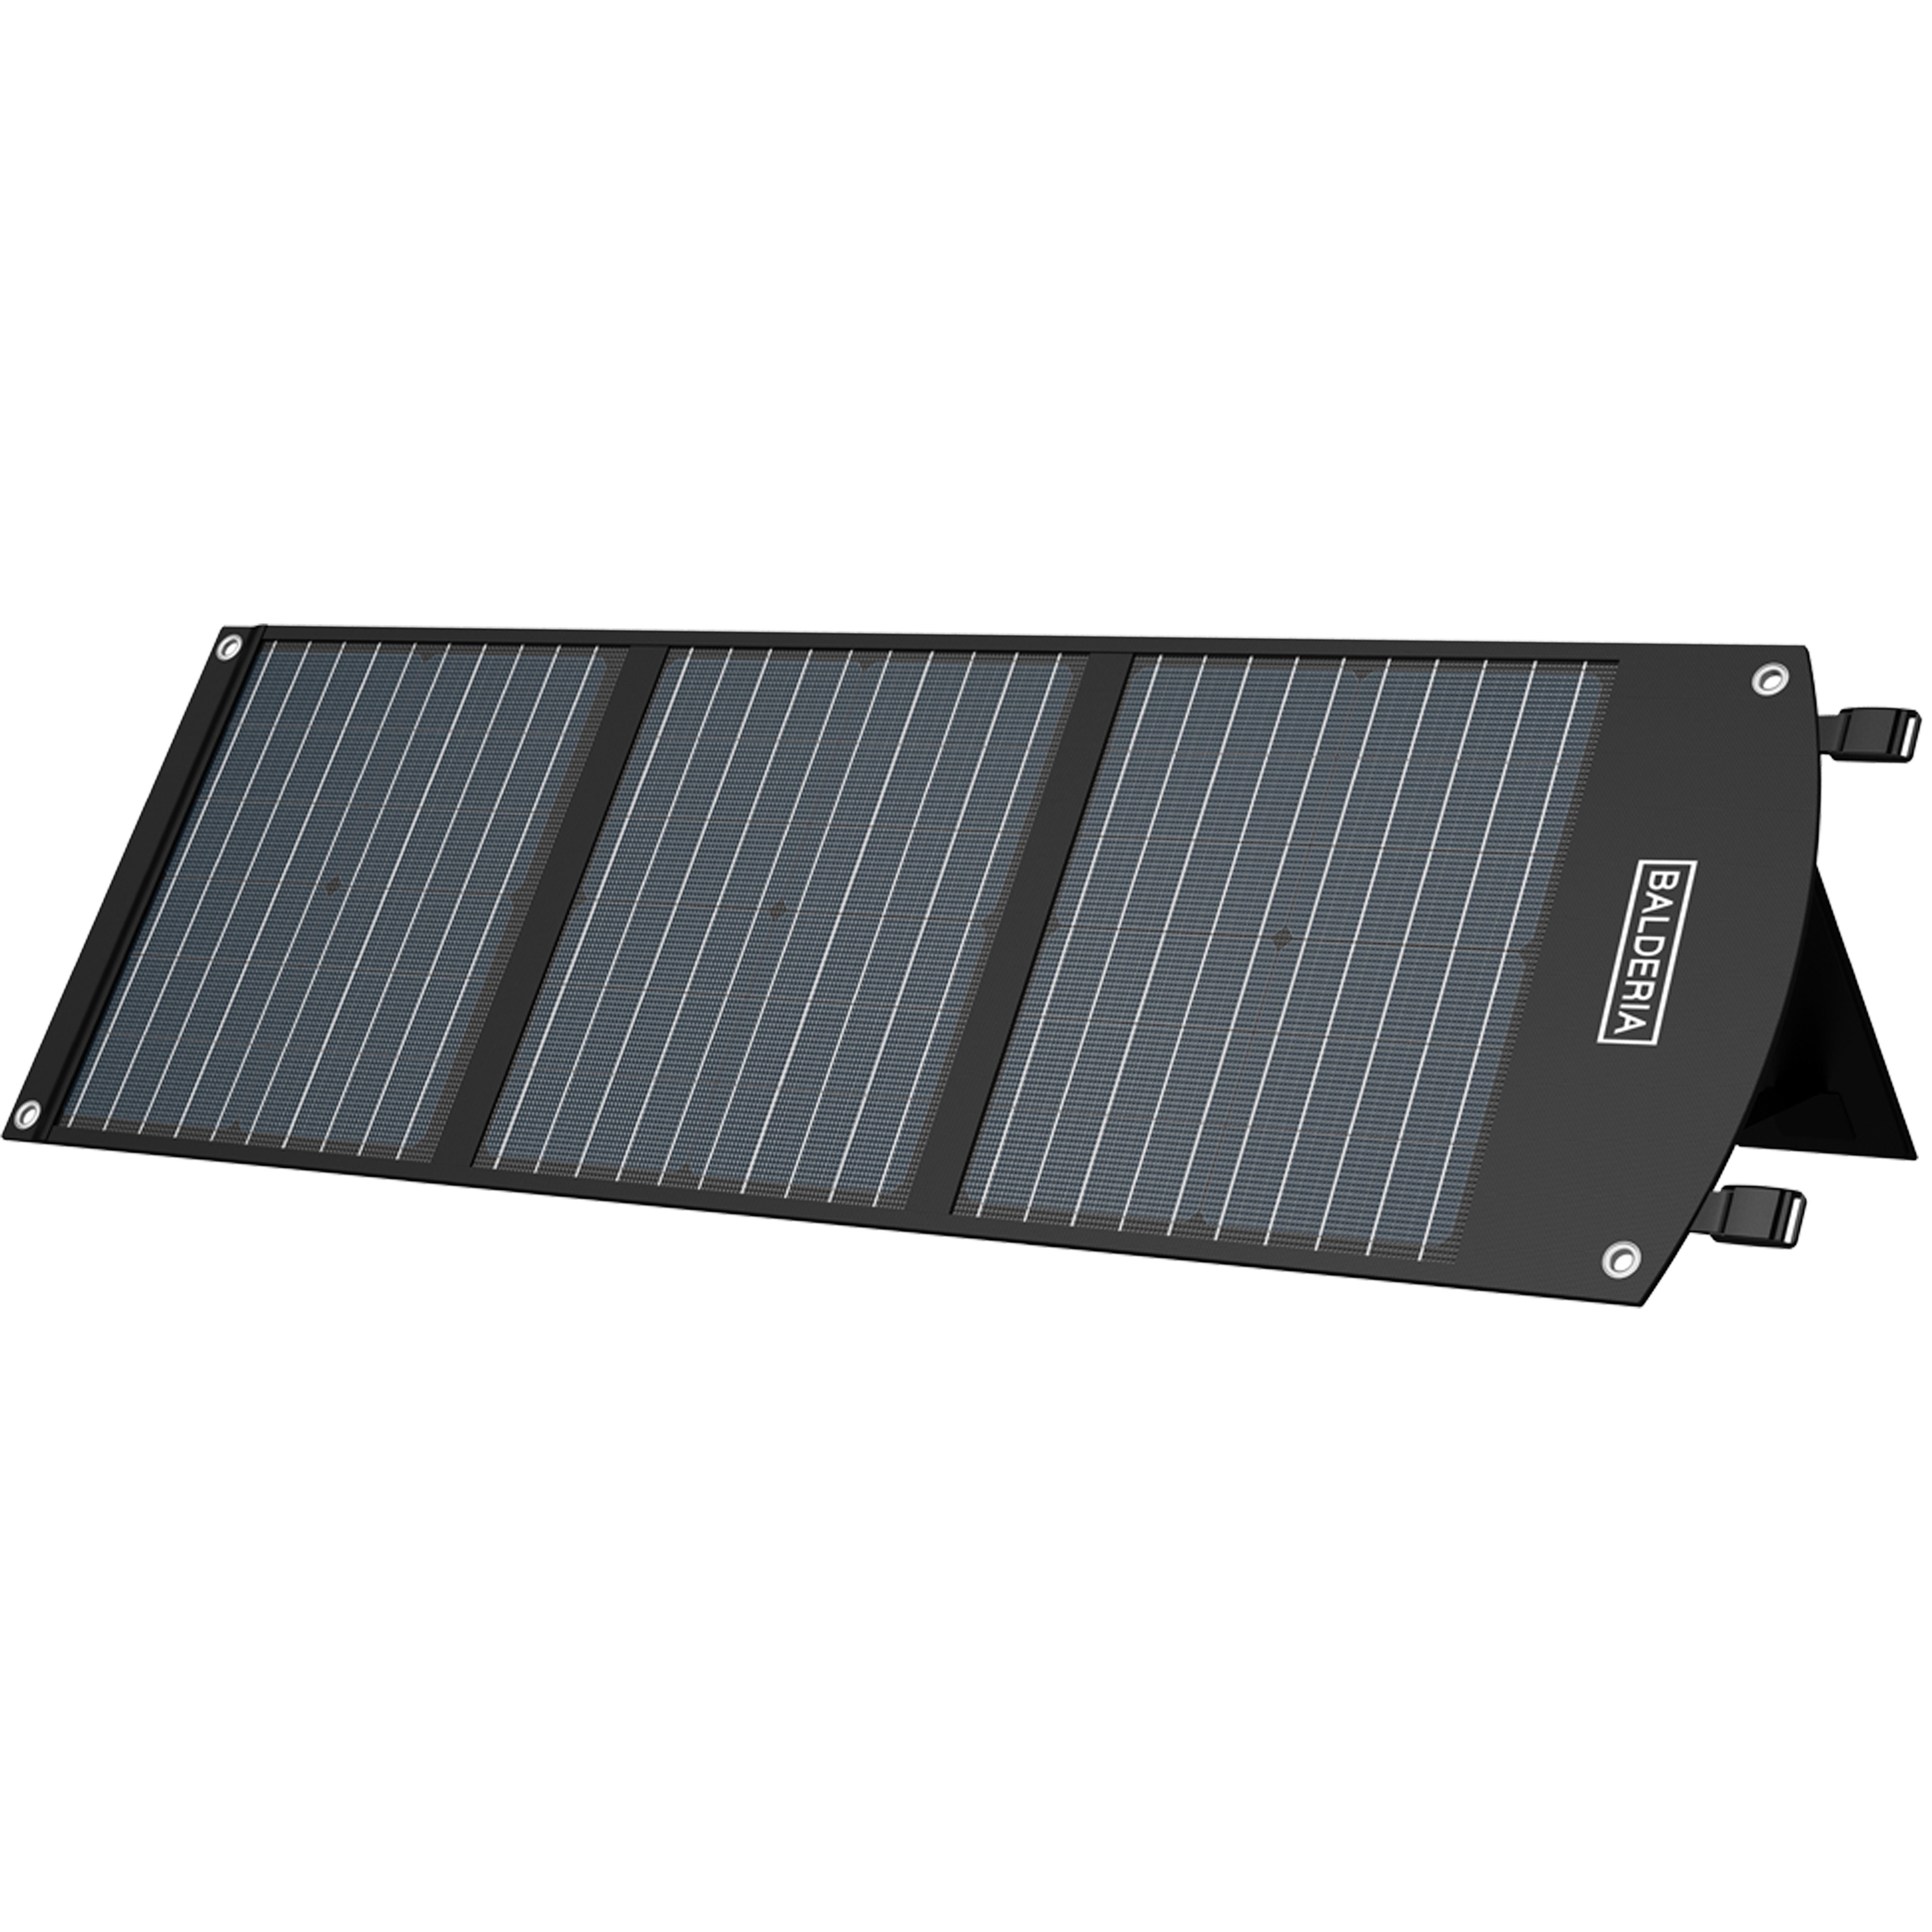 Balderia Solarmodul Solarboard, Faltbares Solarmodul 60W für Powerstation